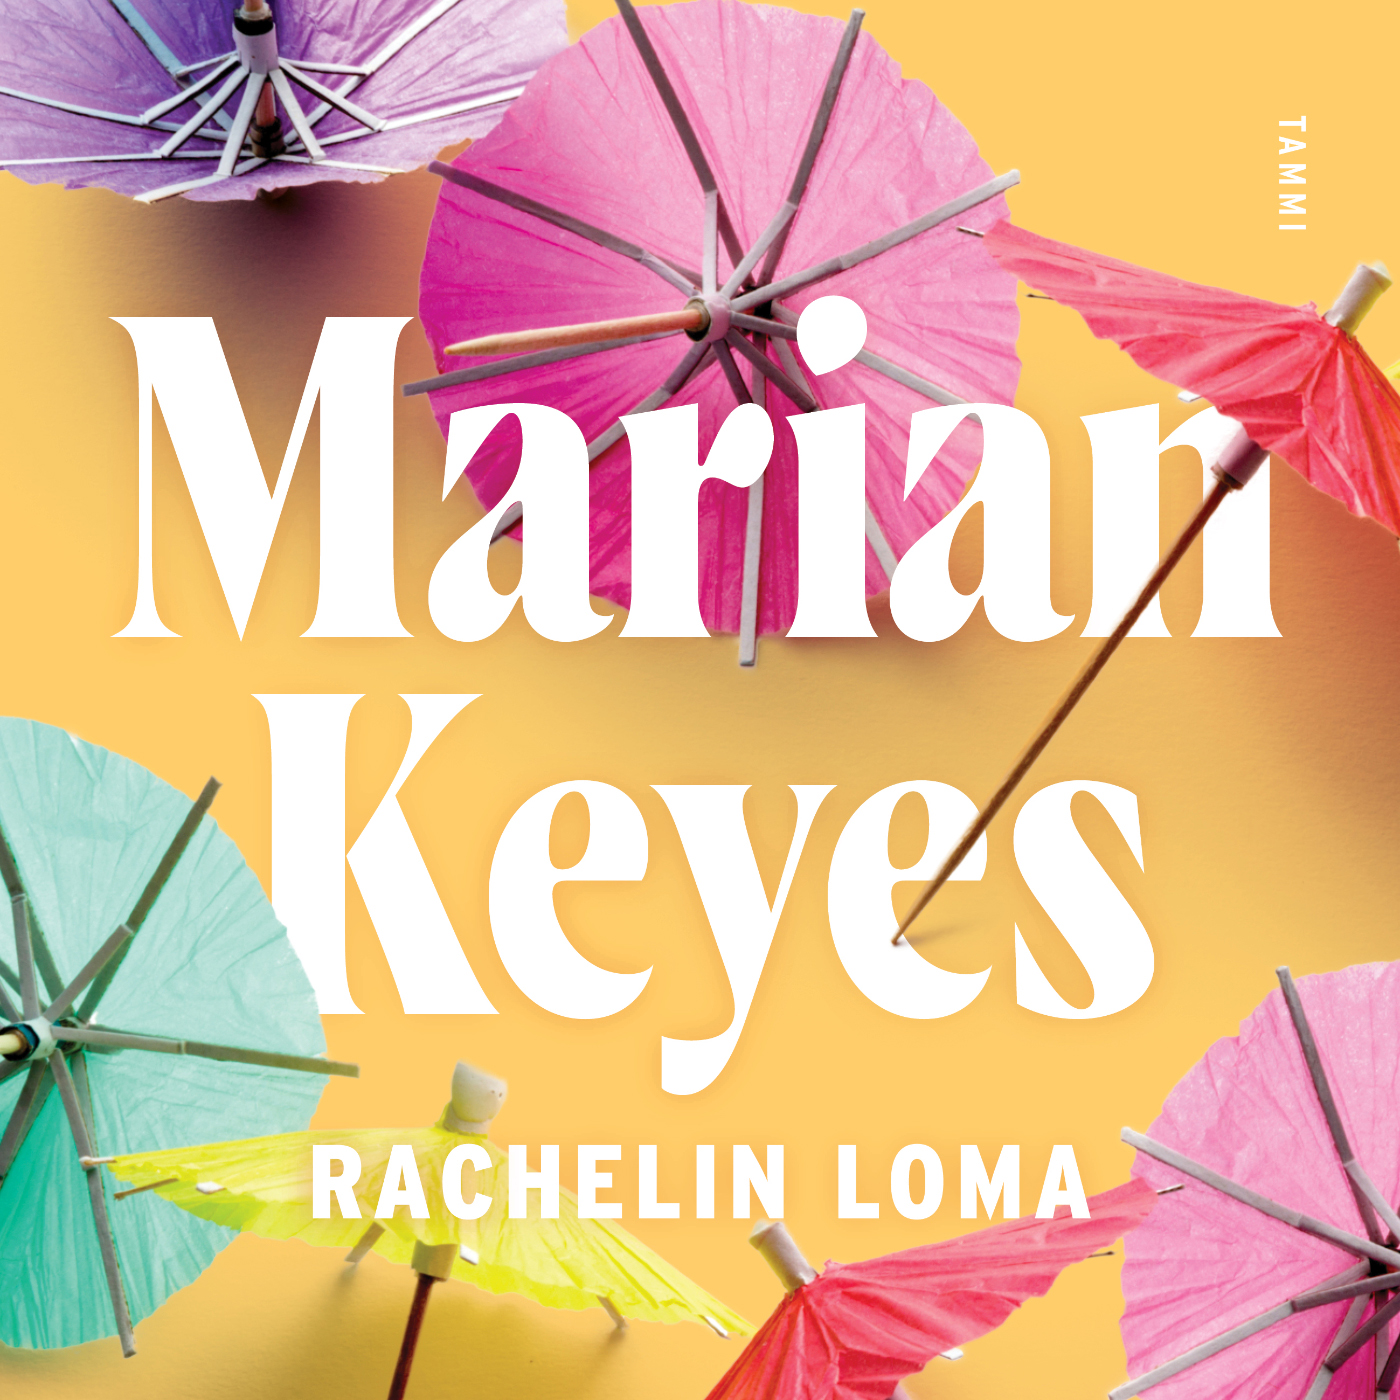 Keyes, Marian - Rachelin loma: Walsh 2, audiobook